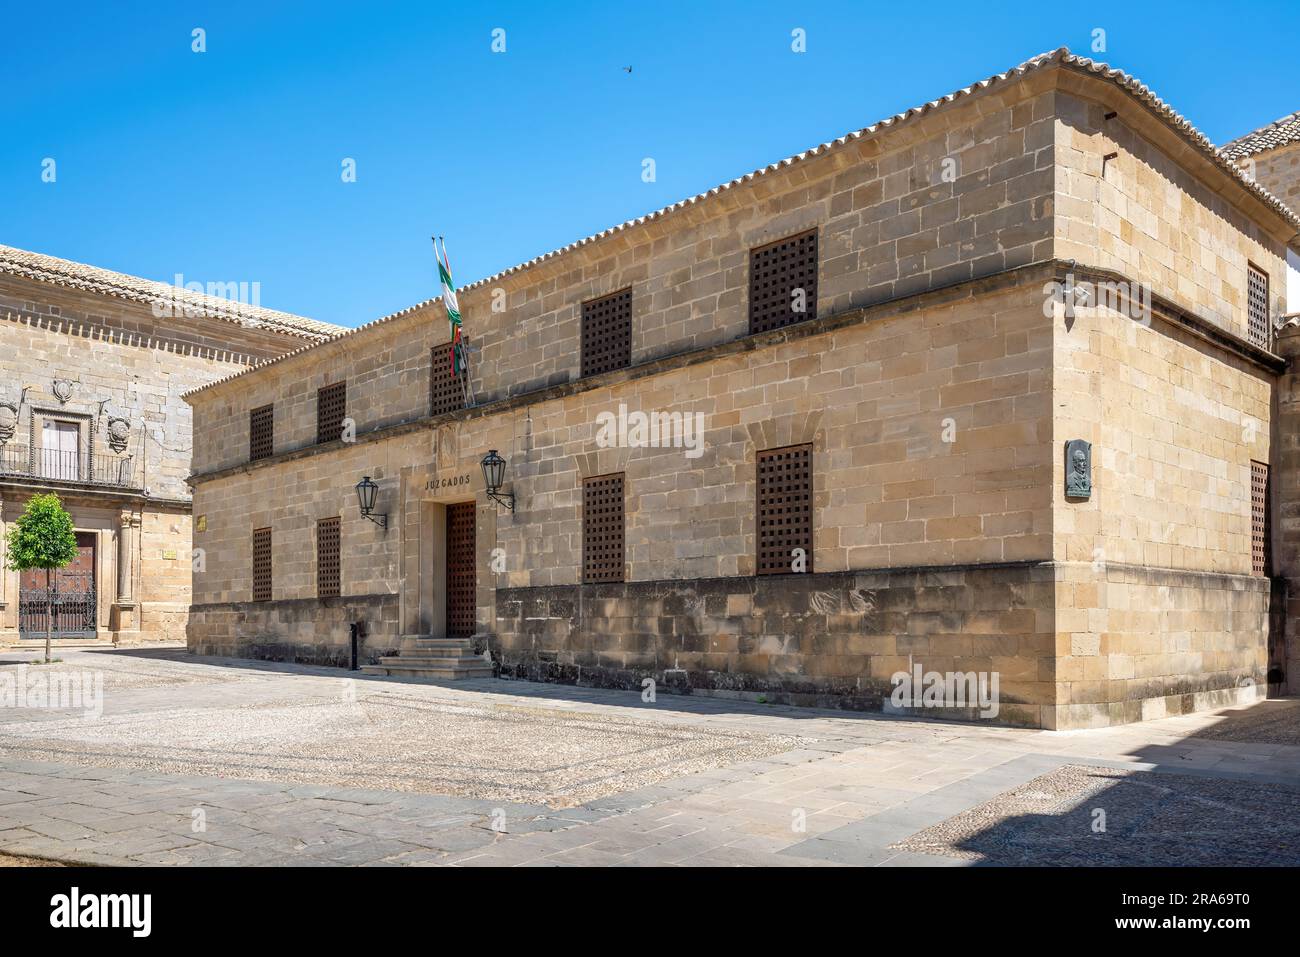 Carcel del Obispo (Bischofsgefängnis) - Ubeda Court House am Plaza Vasquez de Molina Square - Ubeda, Jaen, Spanien Stockfoto